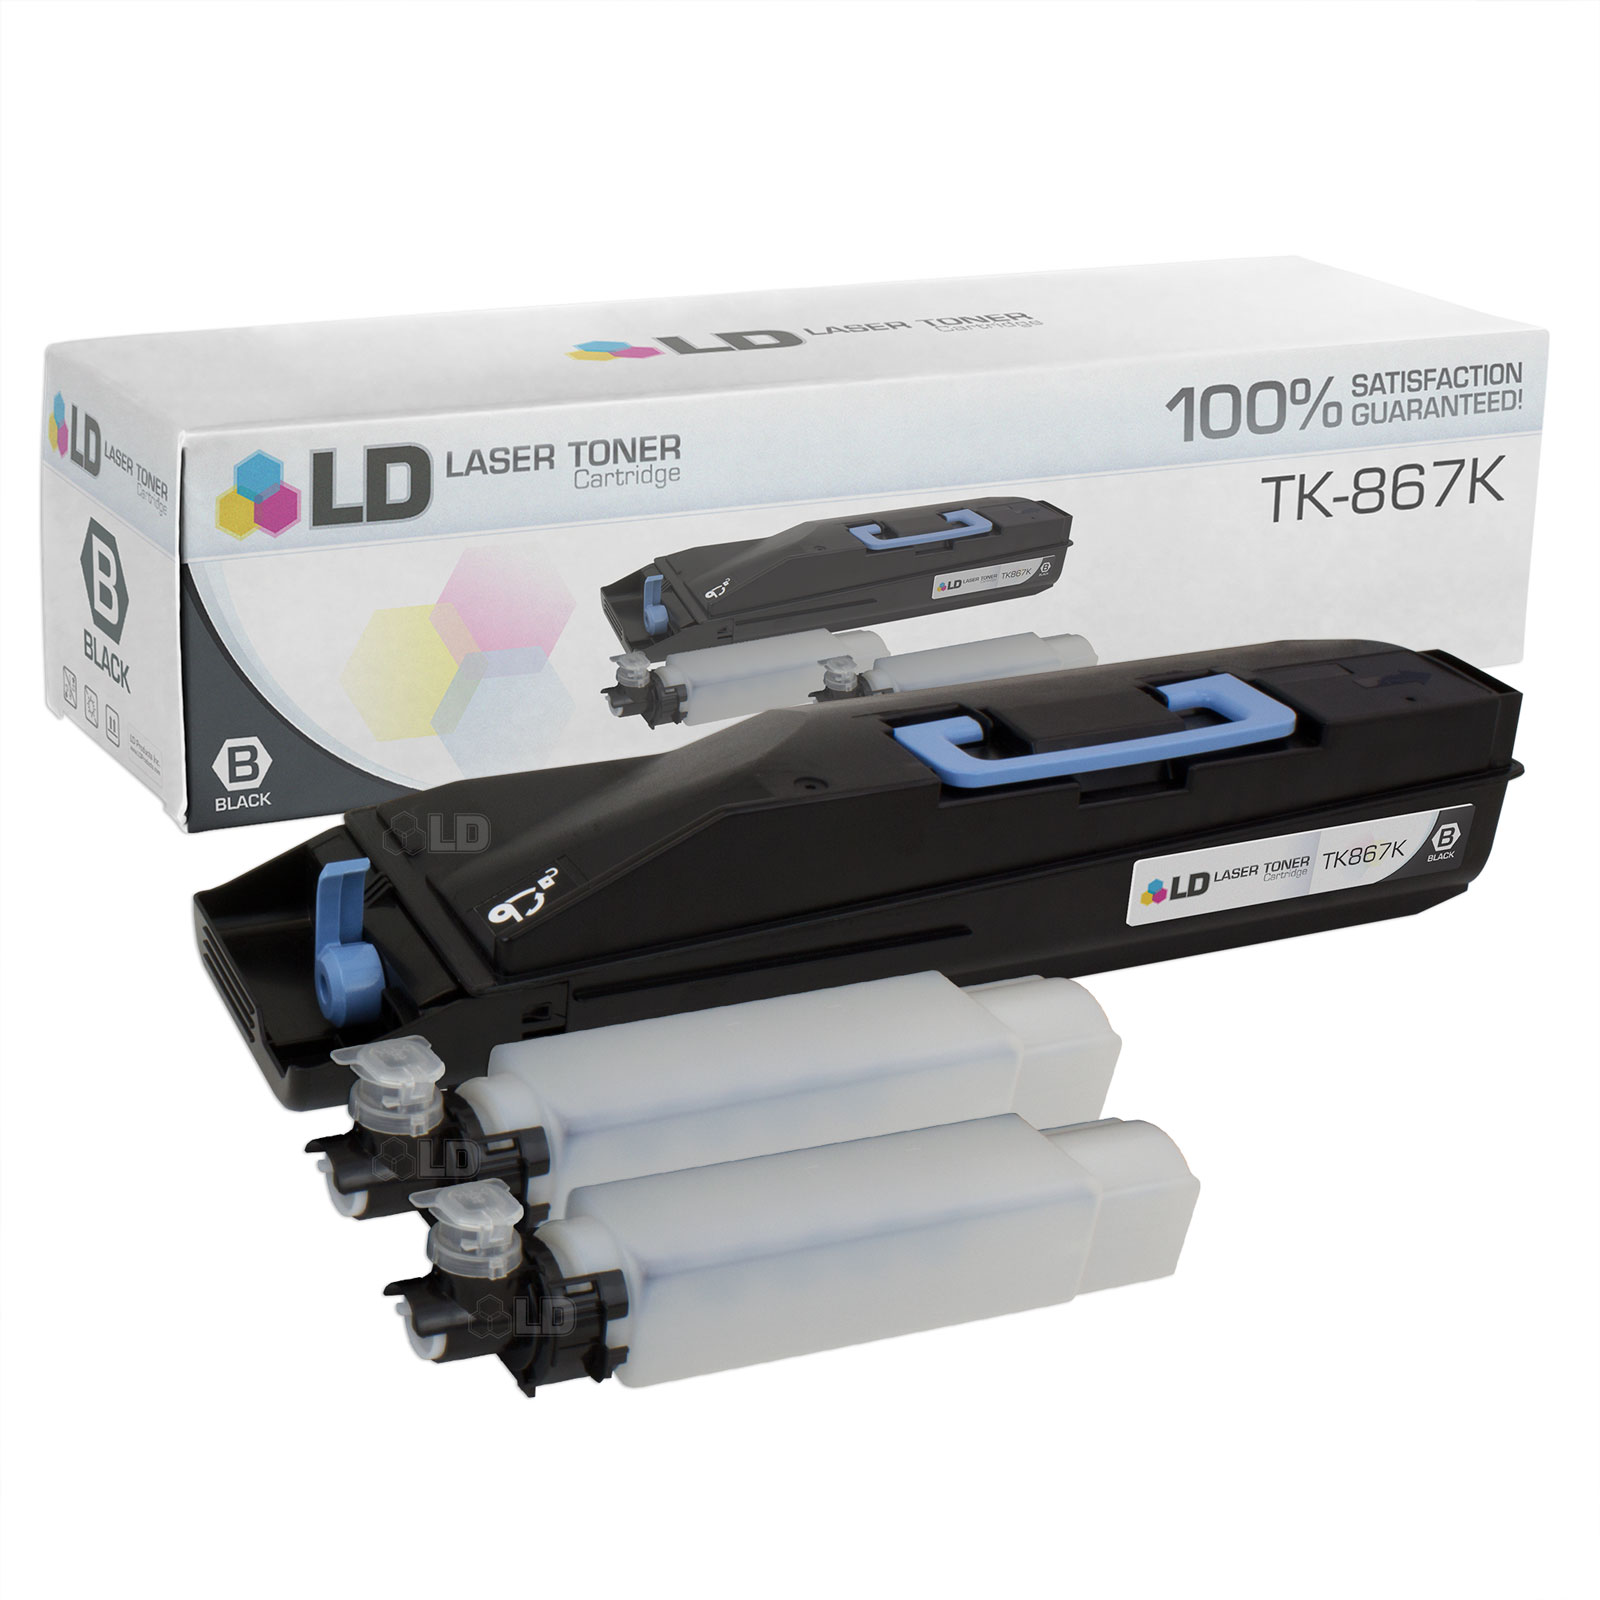 LD Compatible Replacement for Kyocera Mita TK-867K Black Laser Toner Cartridge for use in Kyocera Mita TASKalfa 250ci, and 300ci s - image 1 of 1